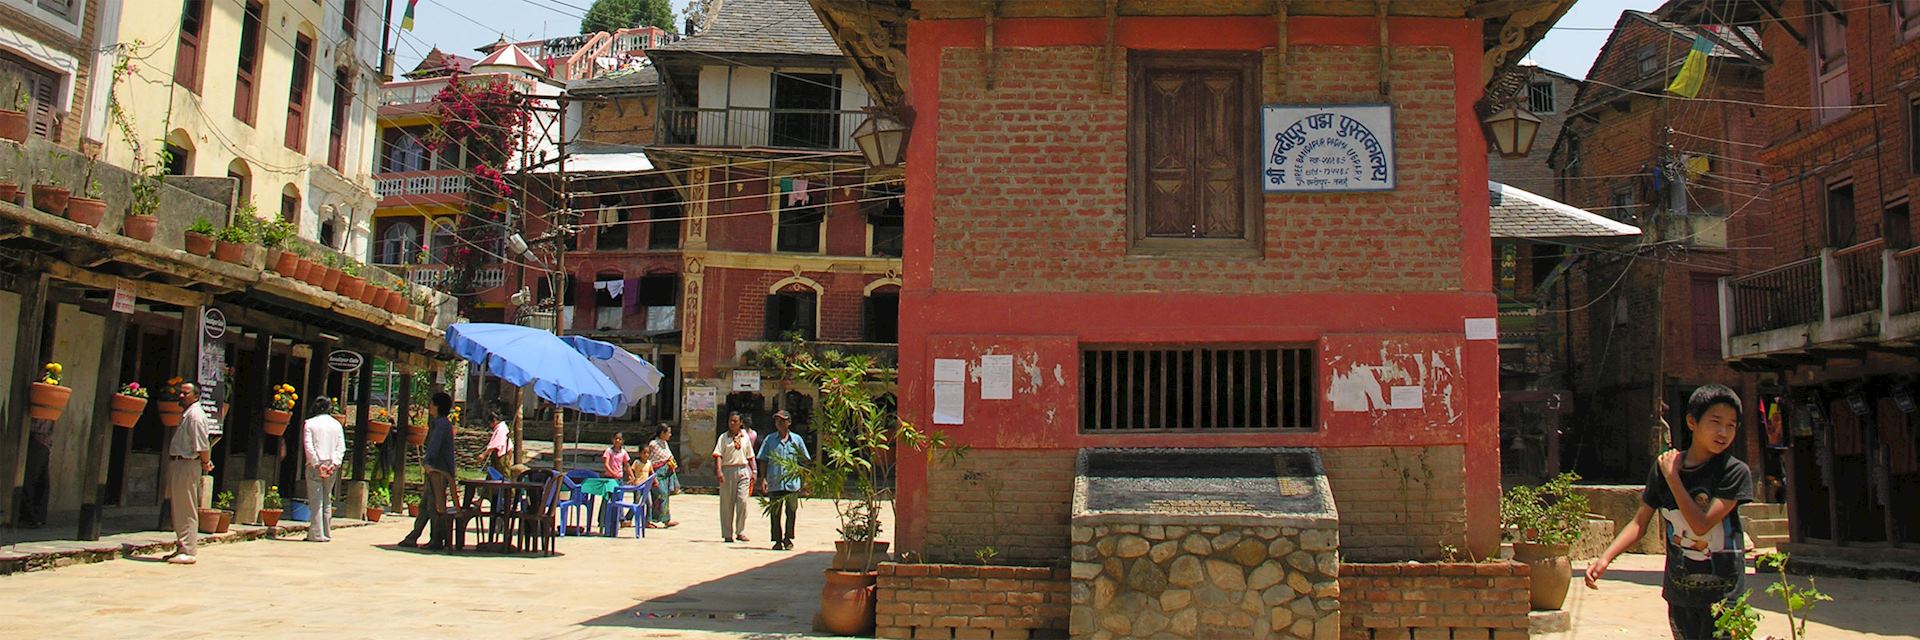 Main street in Bandipur, Nepal